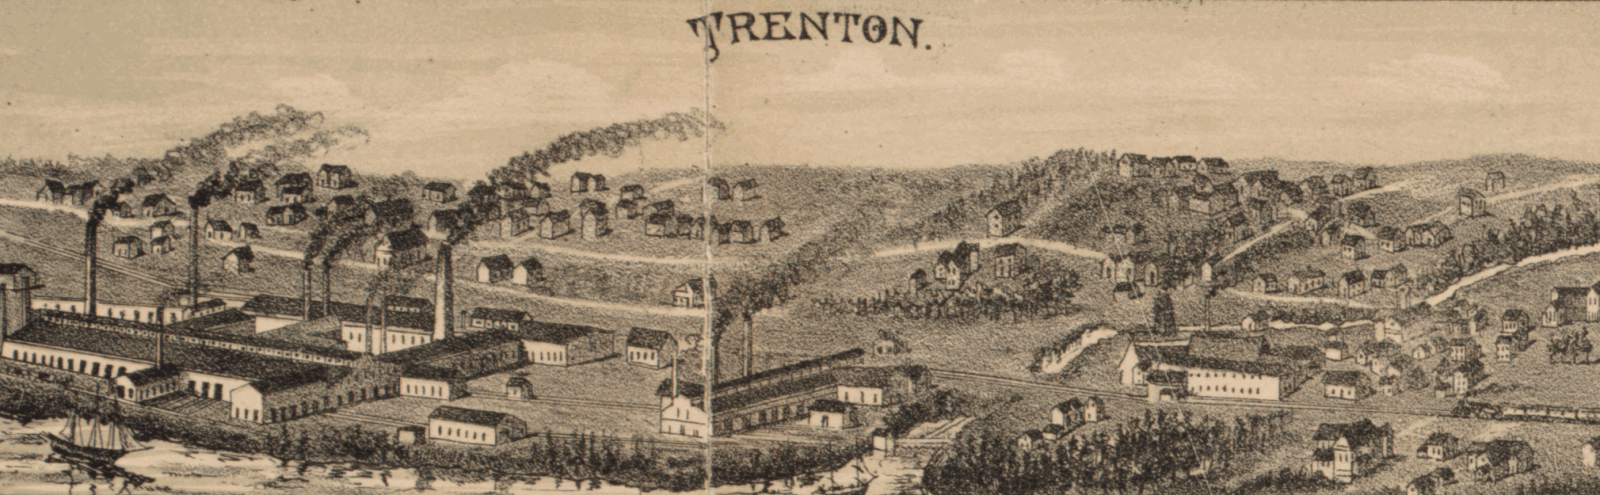 1889 Trenton Map Birds eye view map